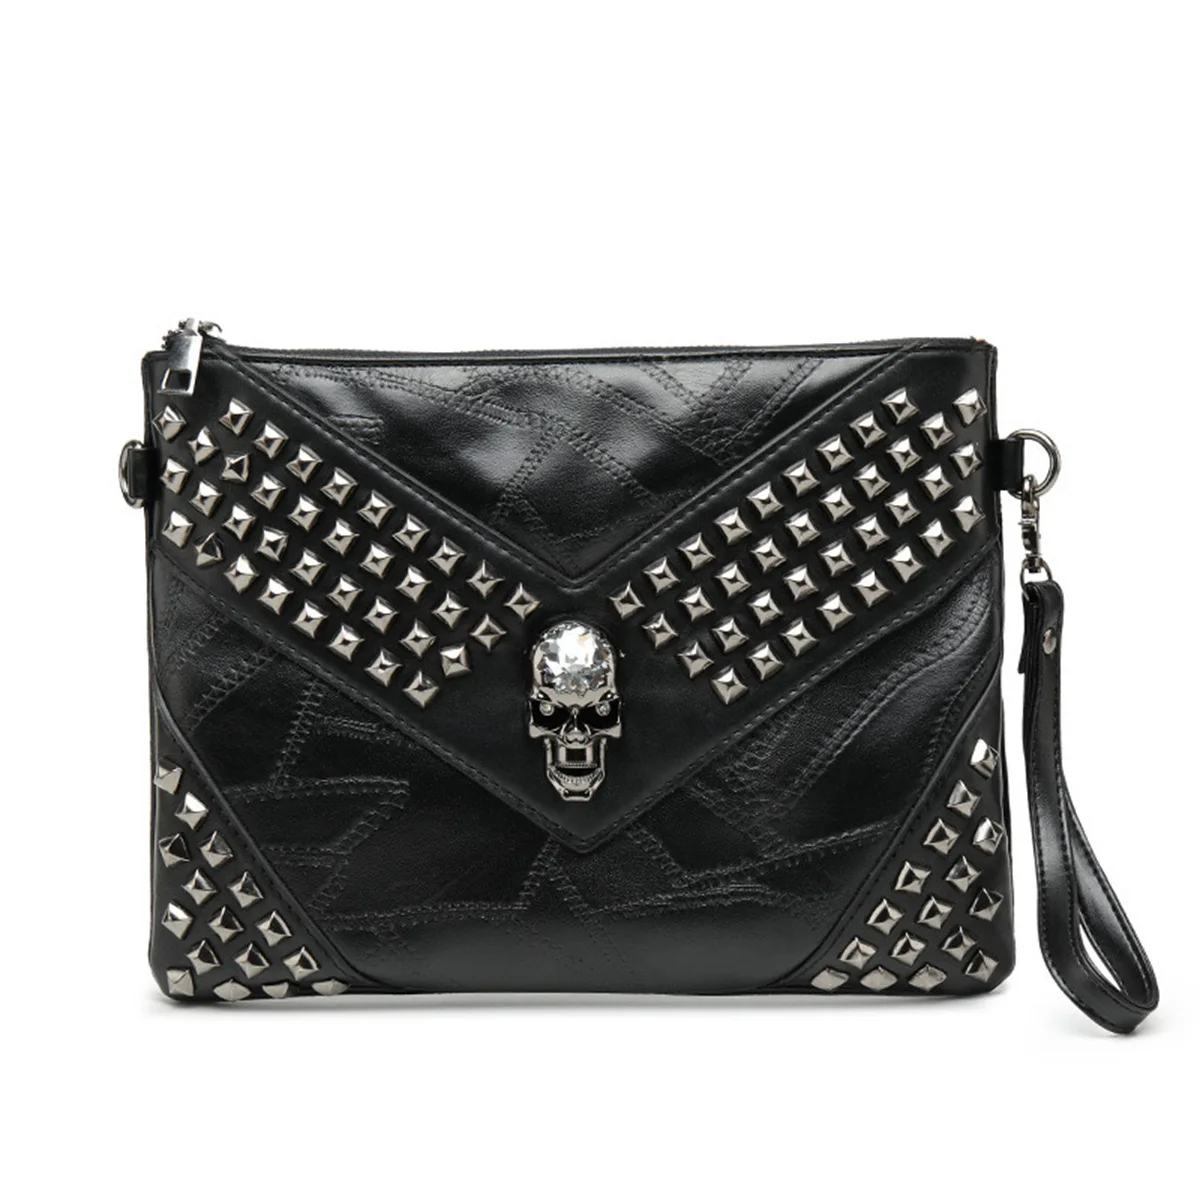 

Fashion Rivet Skull Clutch for Men Luxury Brand Design Men's Clutches Envelope Hand Bag Wrist Bag IPad Handbags Purse Handbags